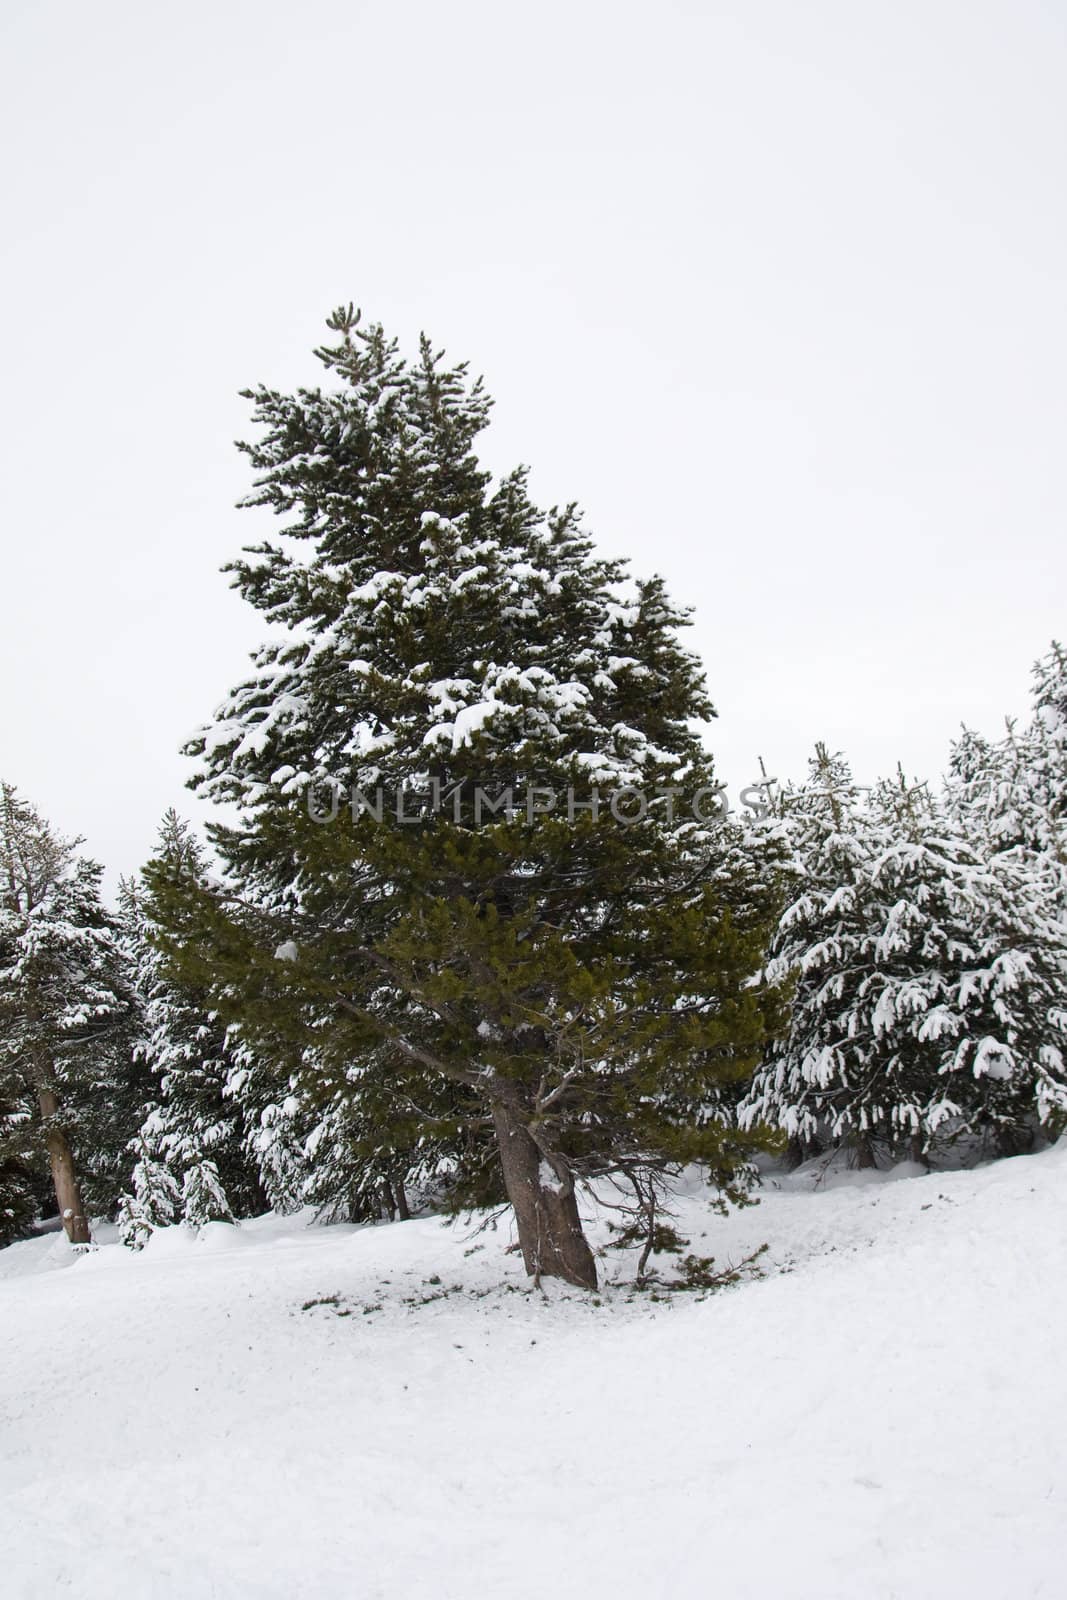 Pine trees in winter by Kenishirotie